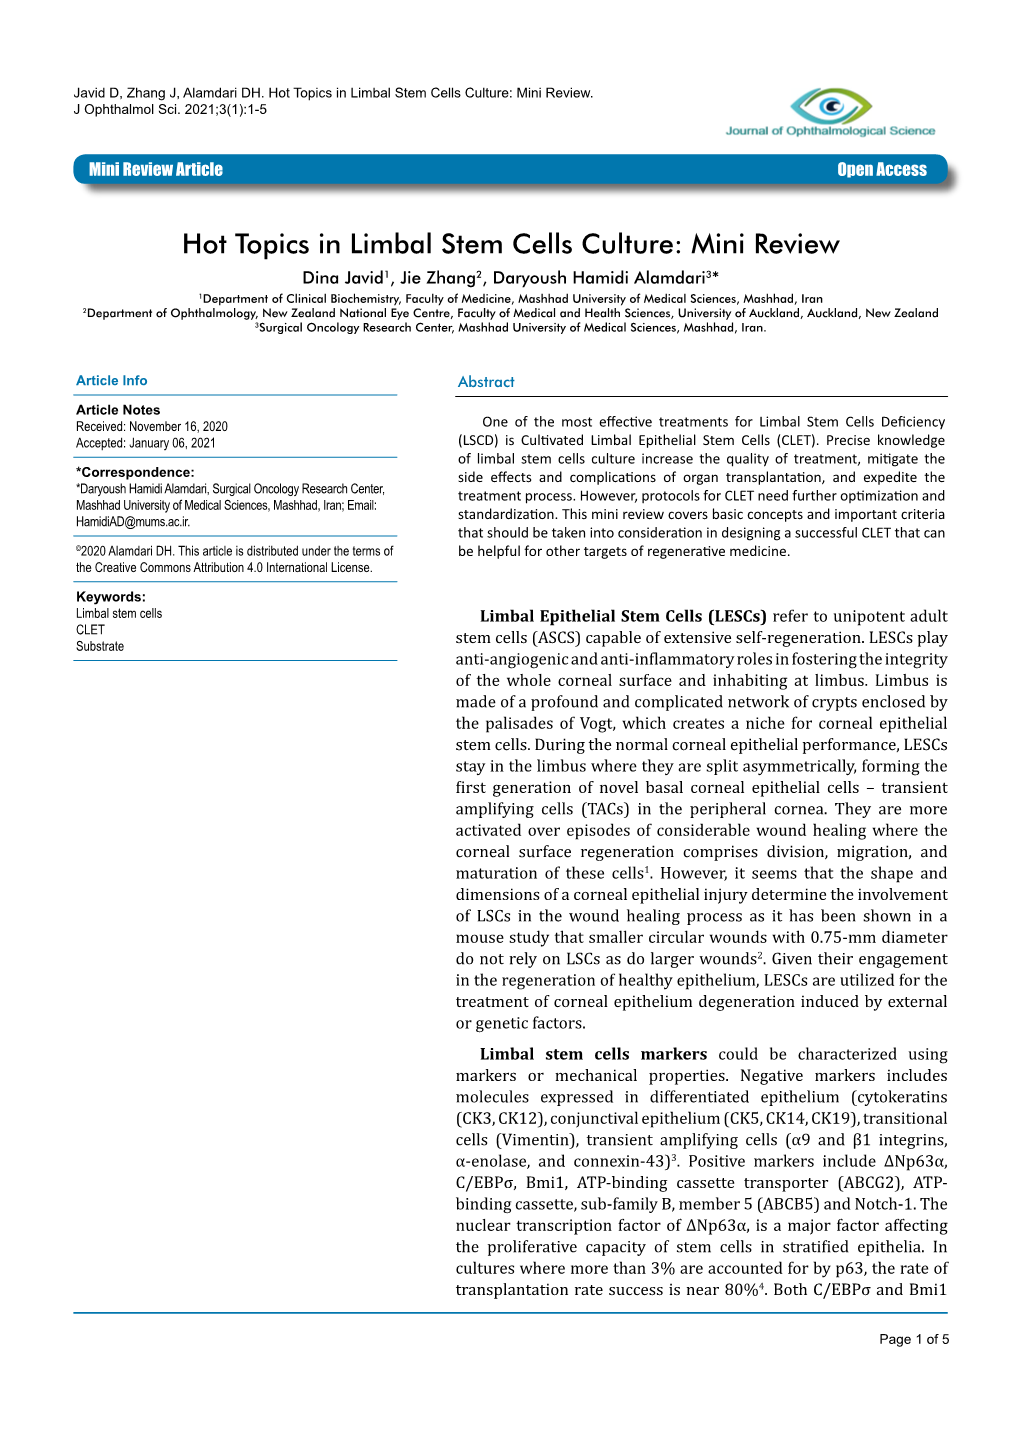 Hot Topics in Limbal Stem Cells Culture: Mini Review